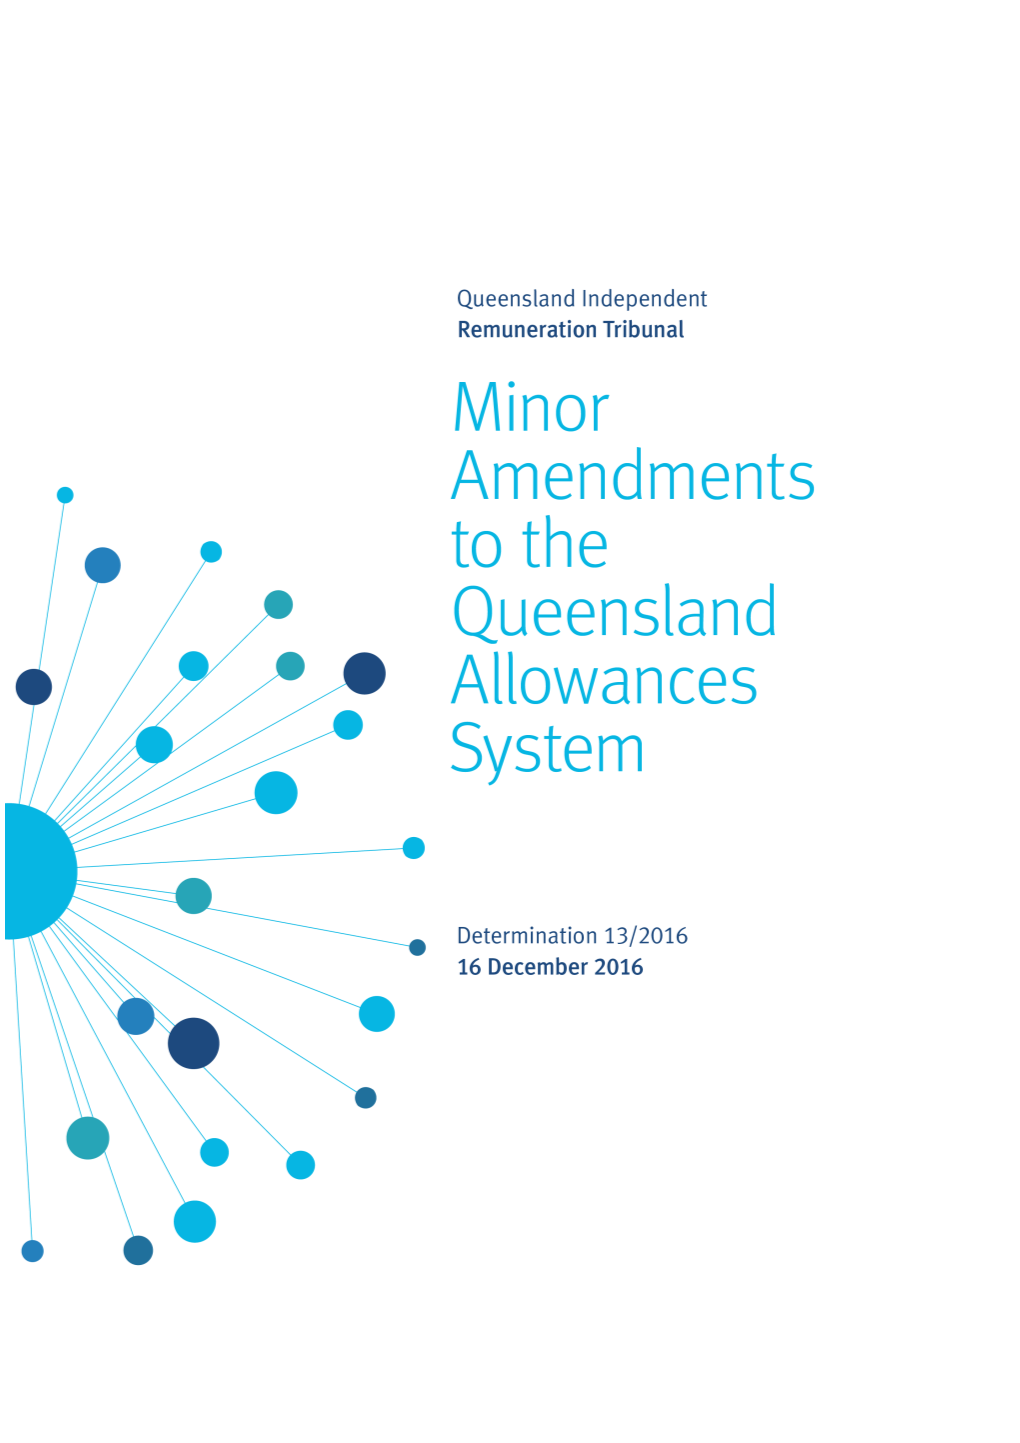 Determination 13/2016 - Minor Amendments to the Queensland Allowances System